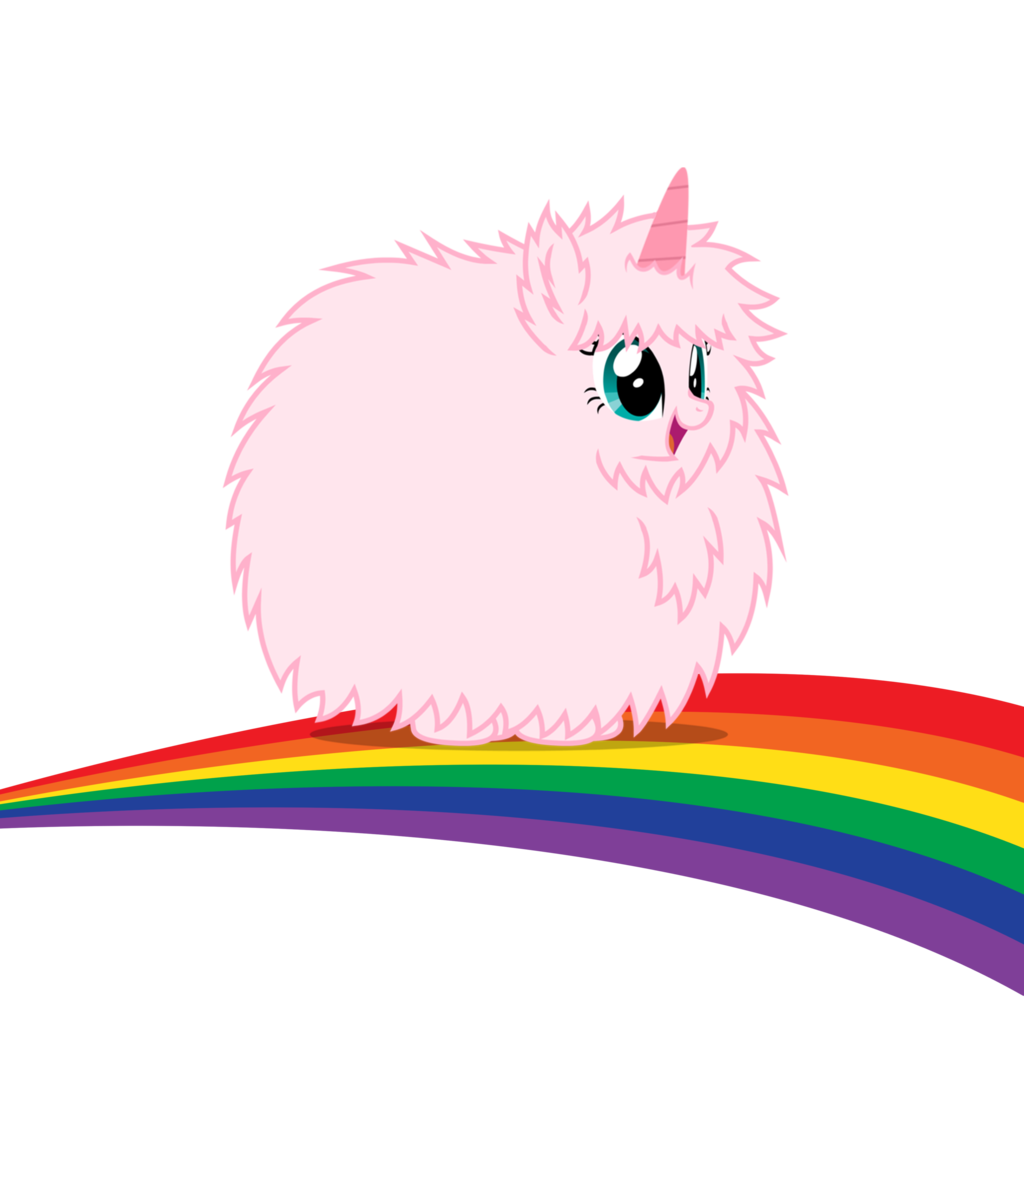 Pink Fluffy Unicorns Dancing On Rainbows by PinkiSpay on DeviantArt